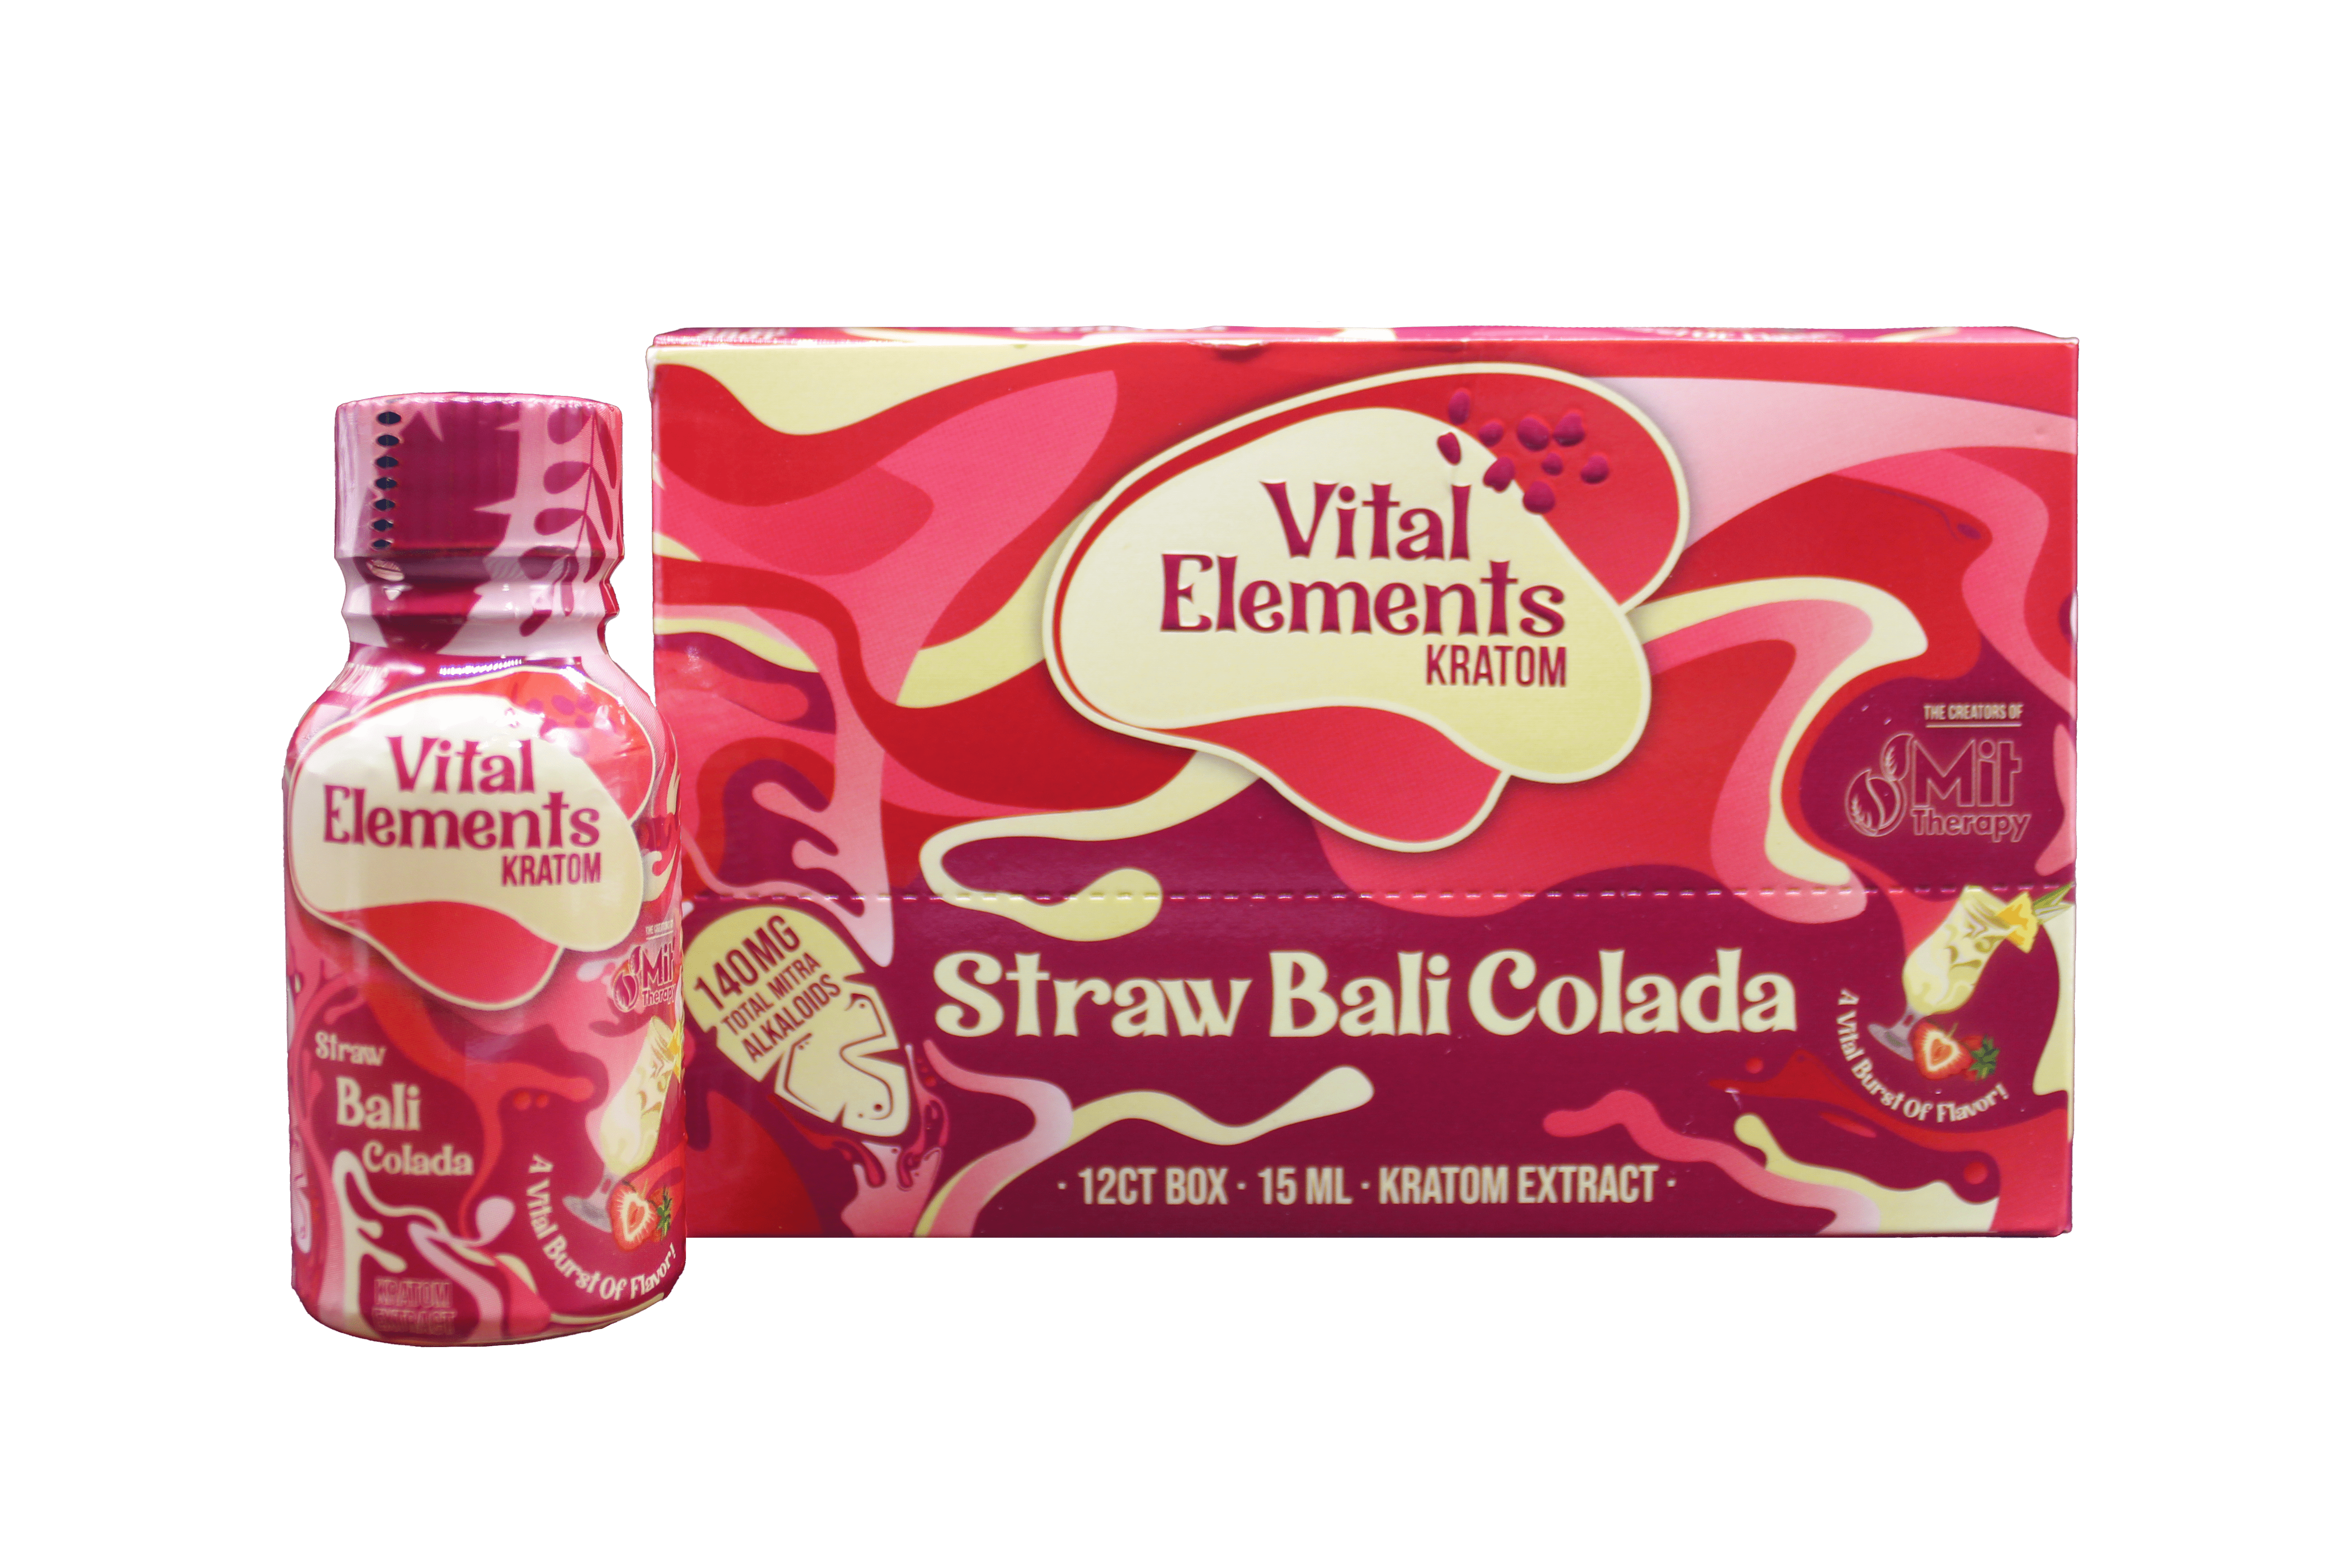 *Vital Elements Extract Shot Straw Bali Colada*